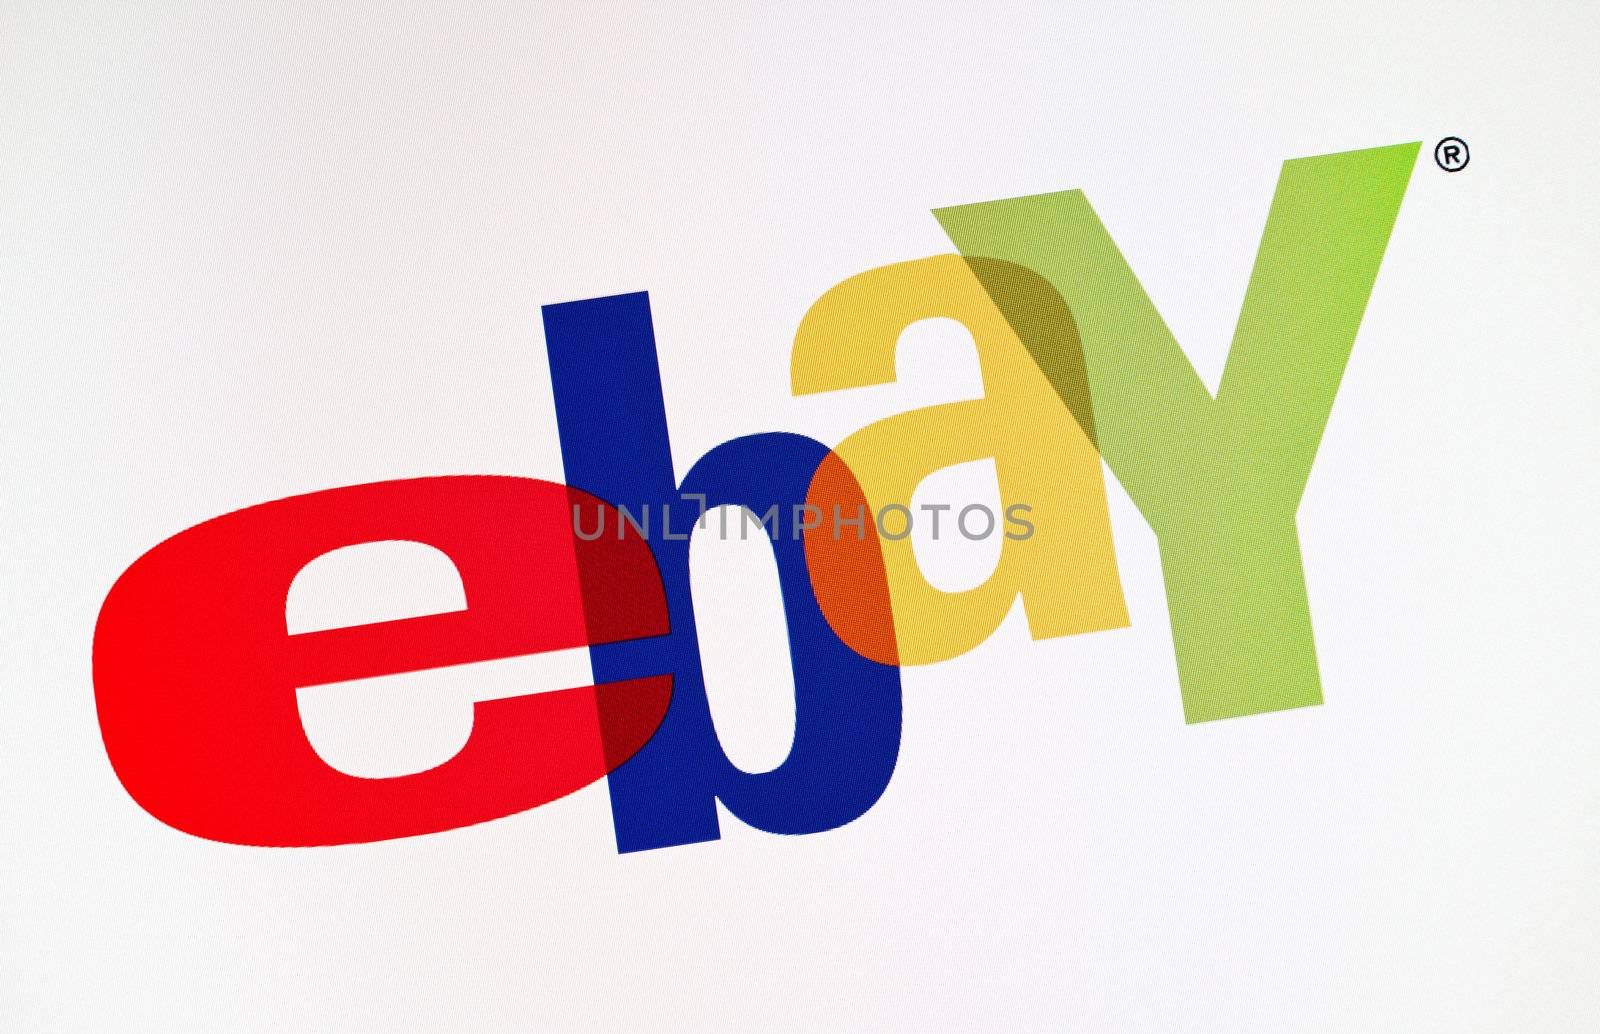 eBay Sign by bloomua